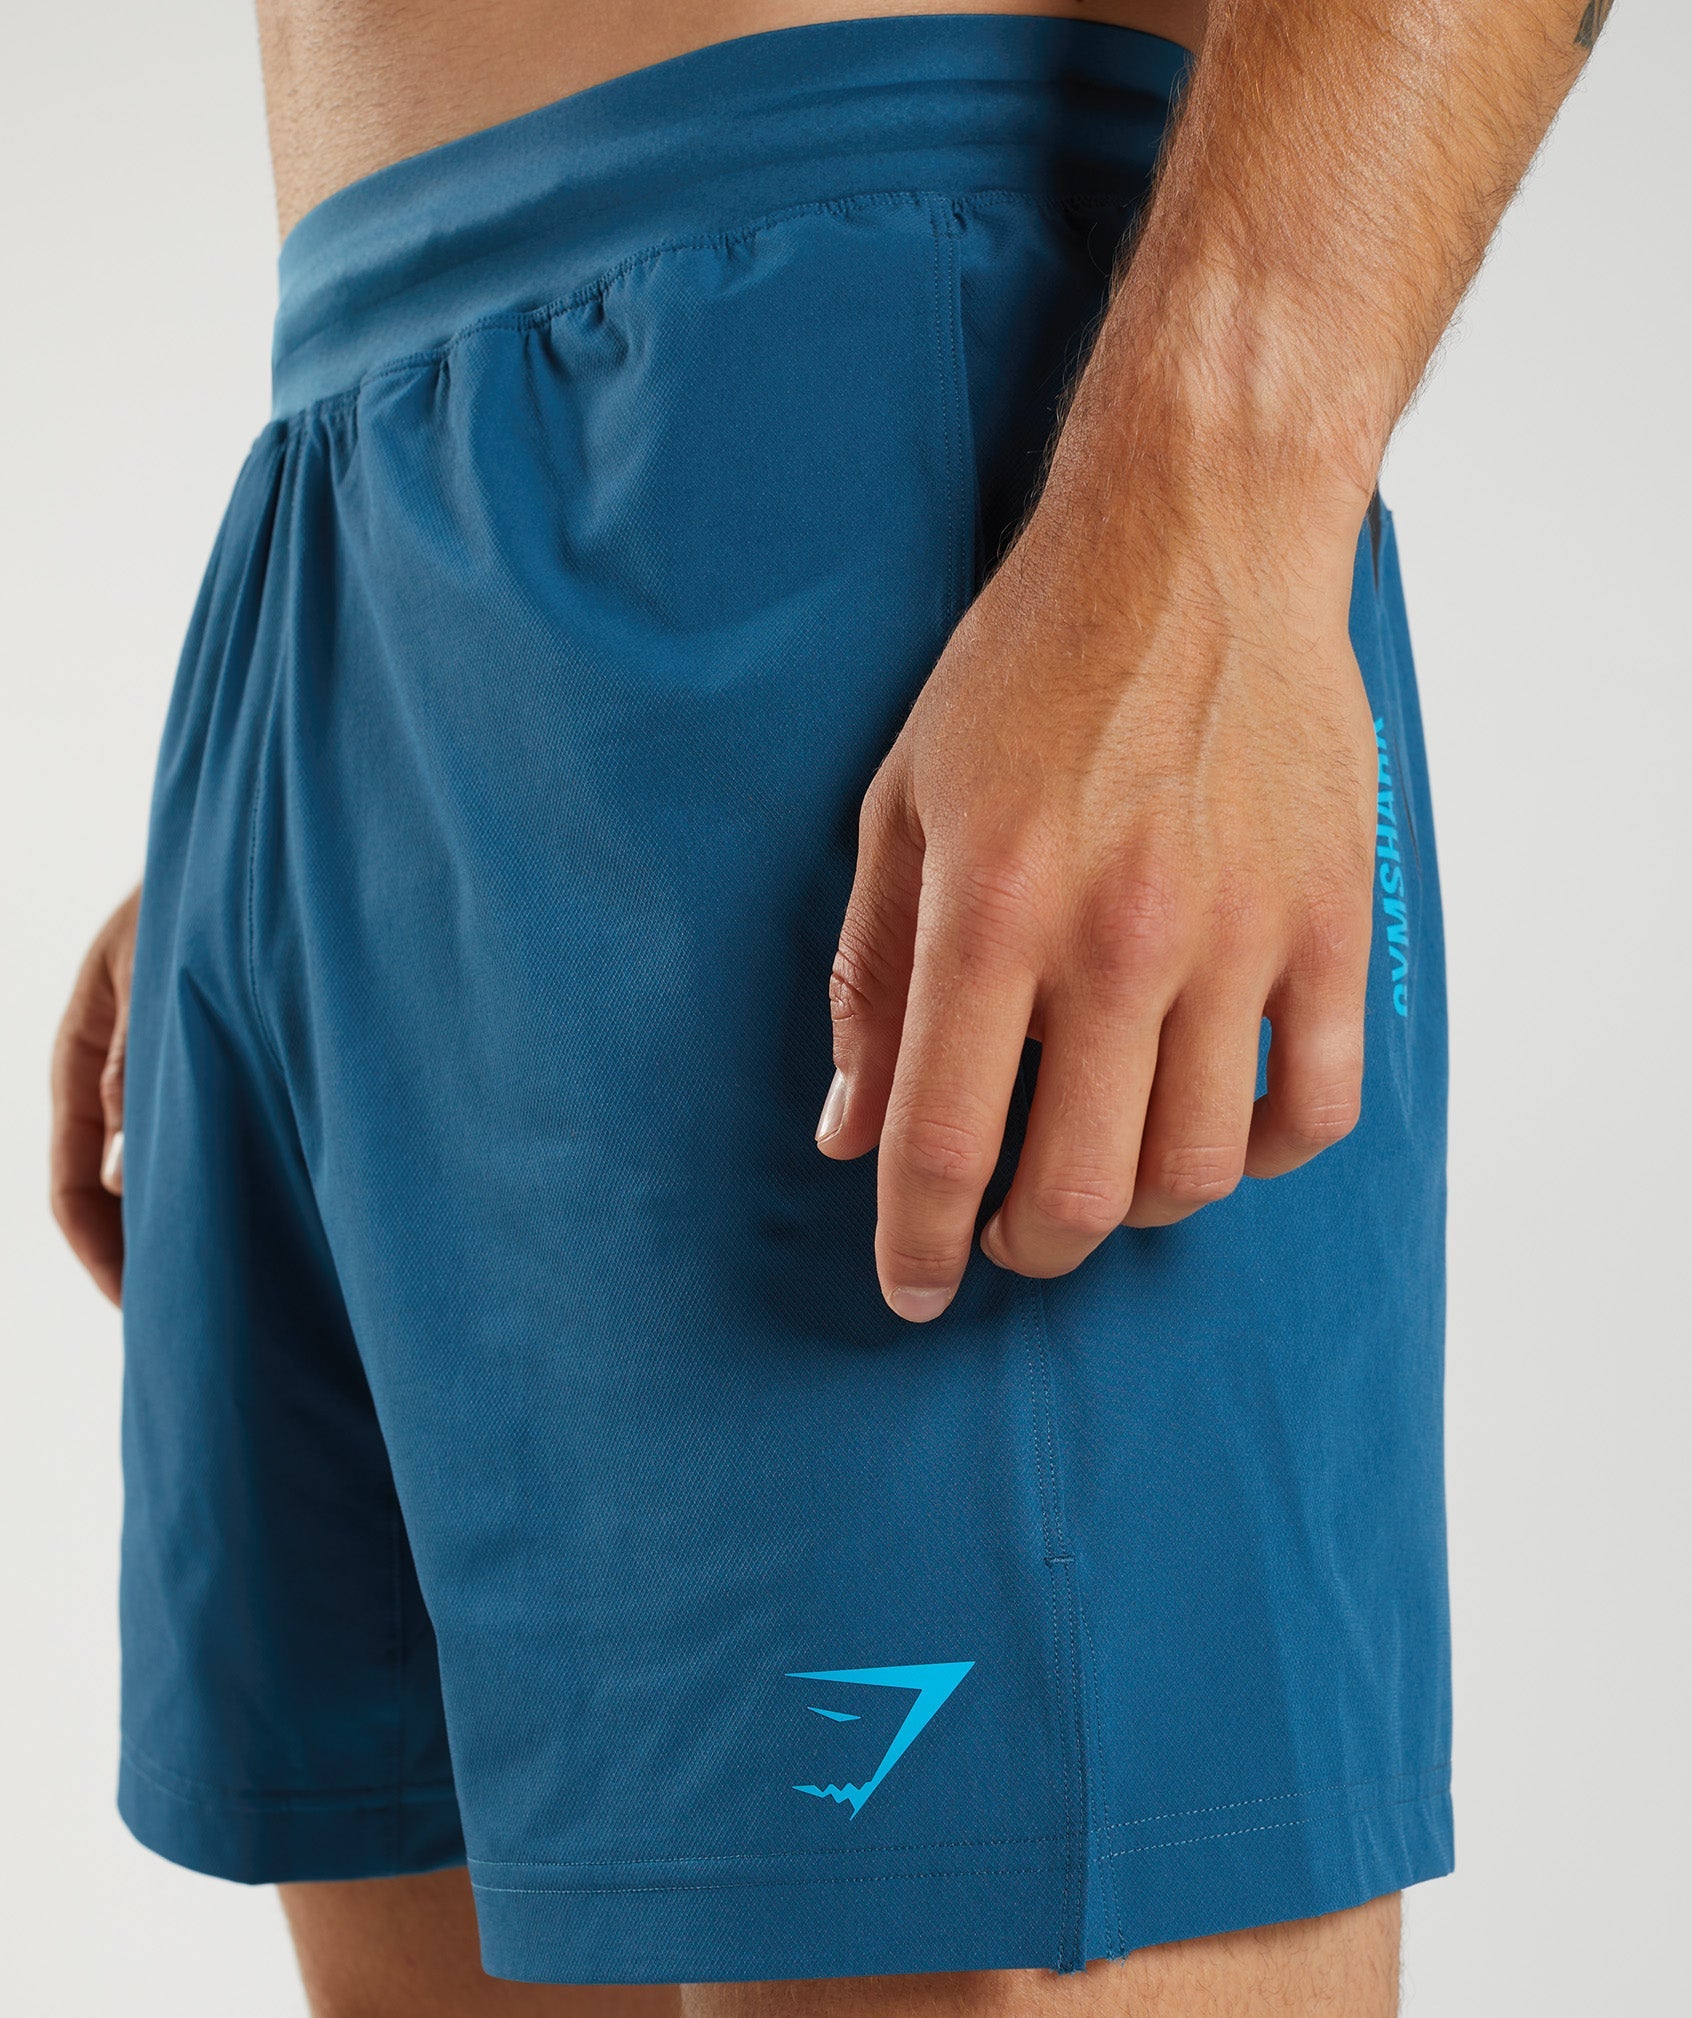 Apex 8" Function Shorts in Atlantic Blue